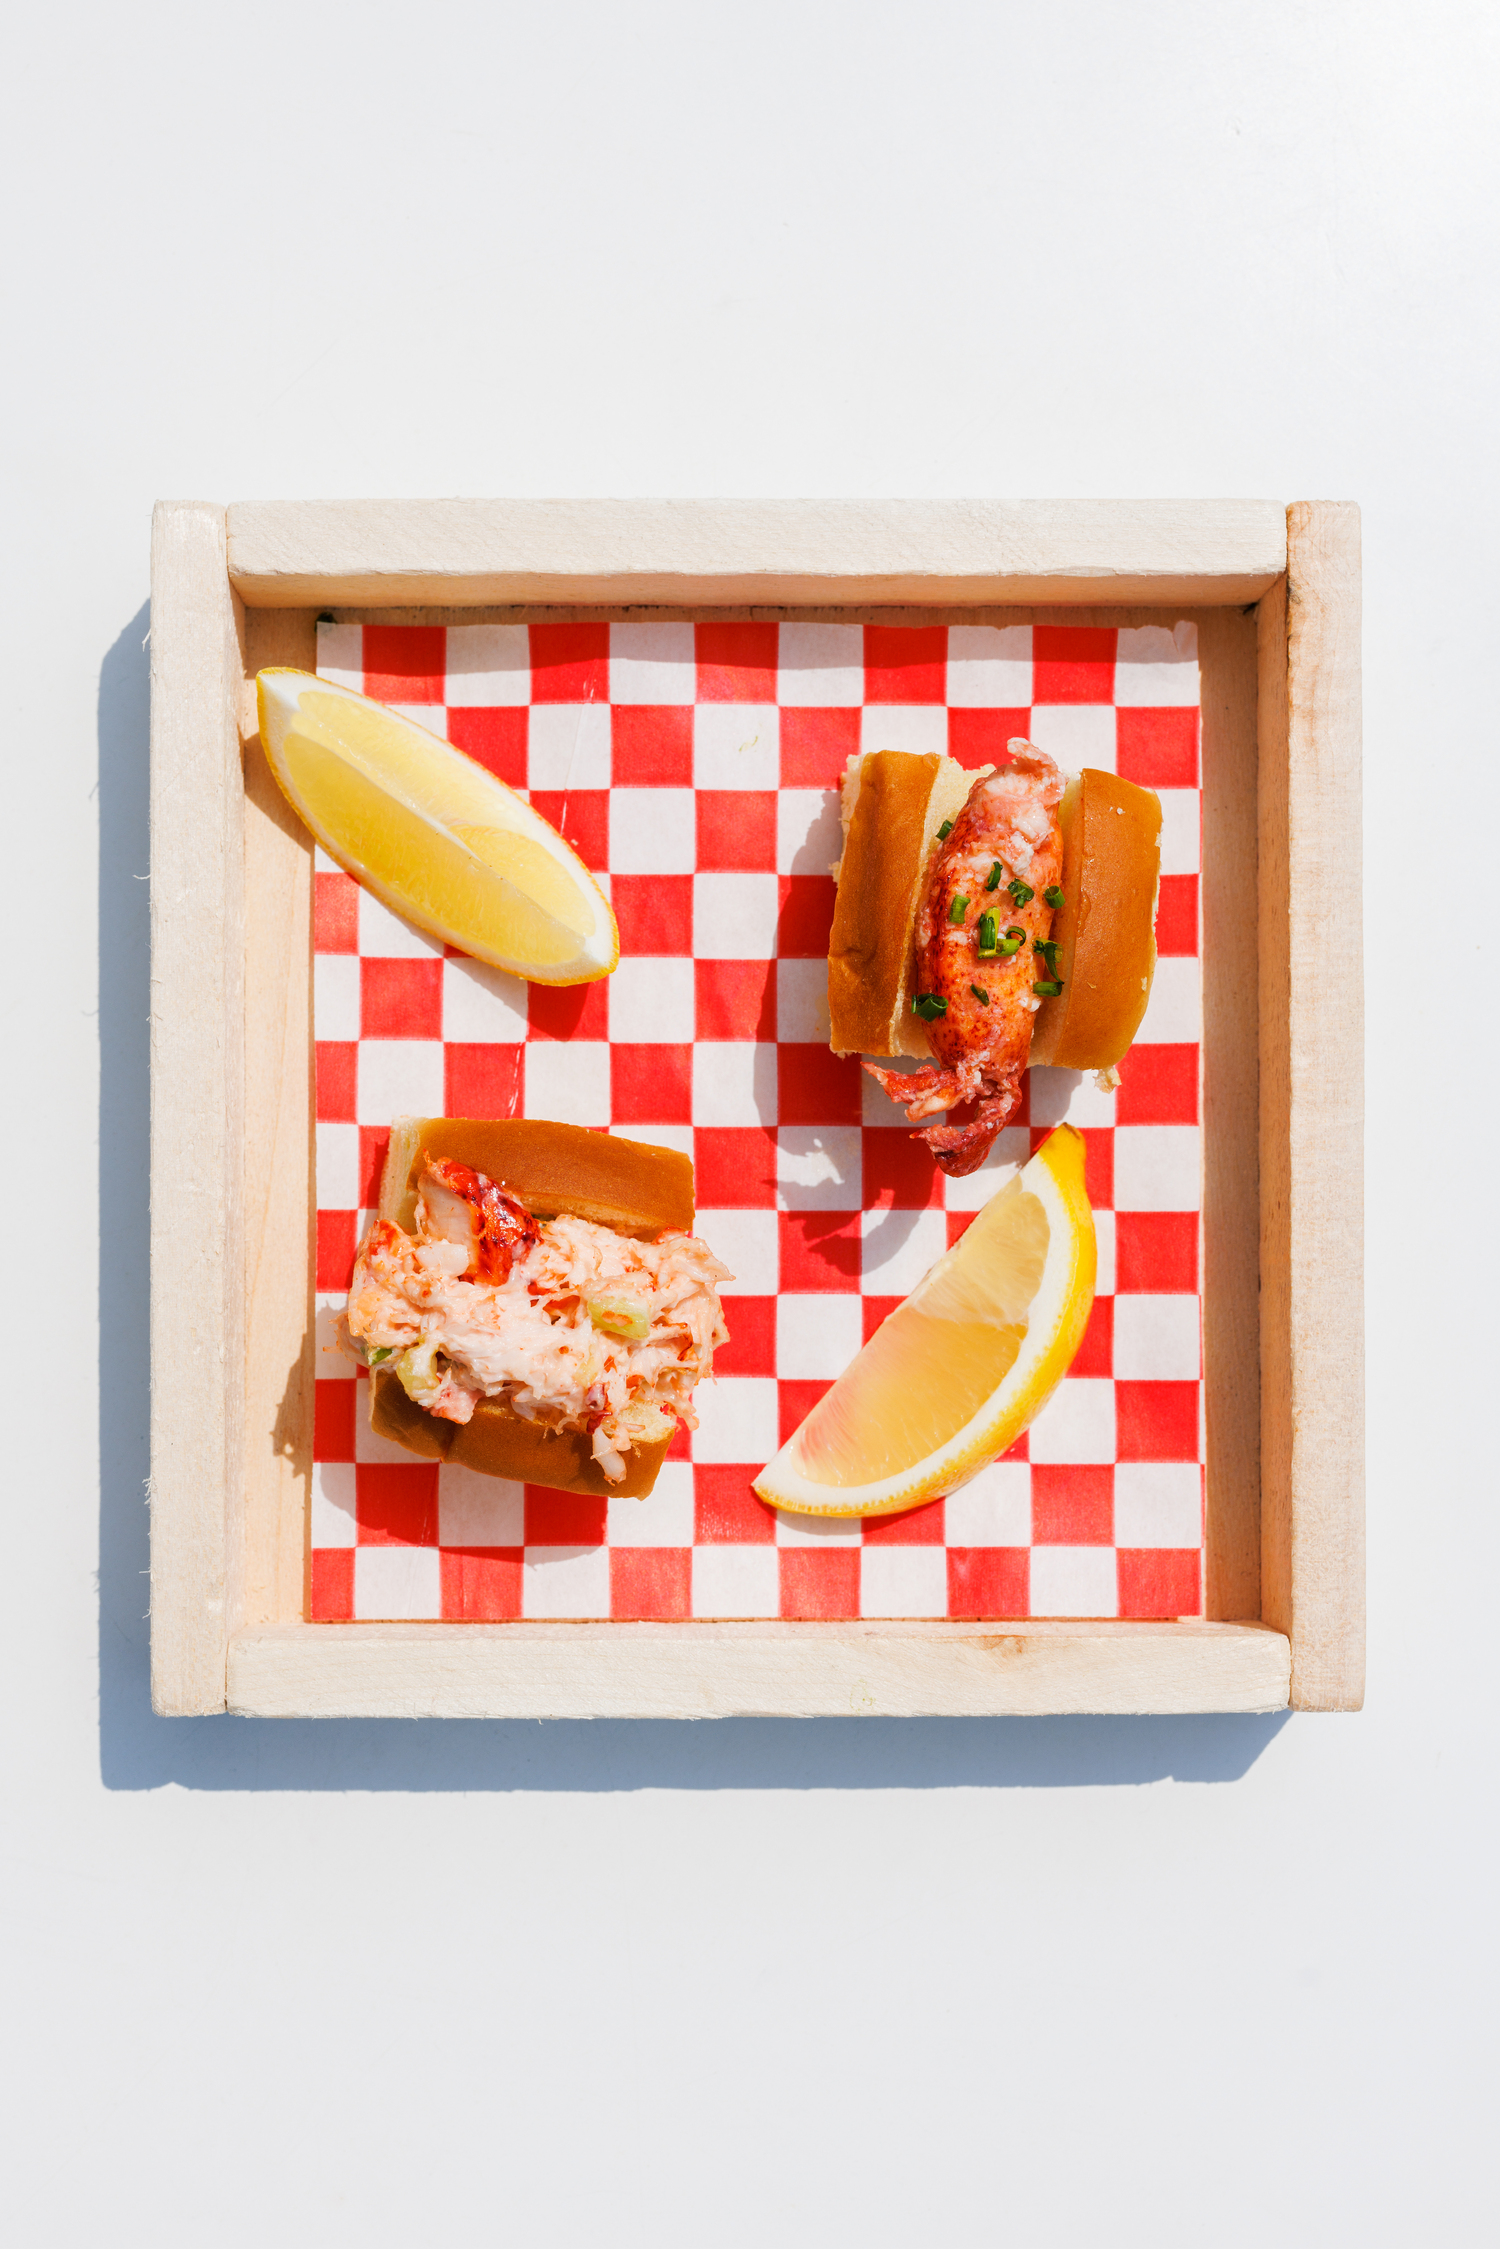 Mini lobster rolls at The Clam Bar at Napeague. JPV PHOTOGRAPHY